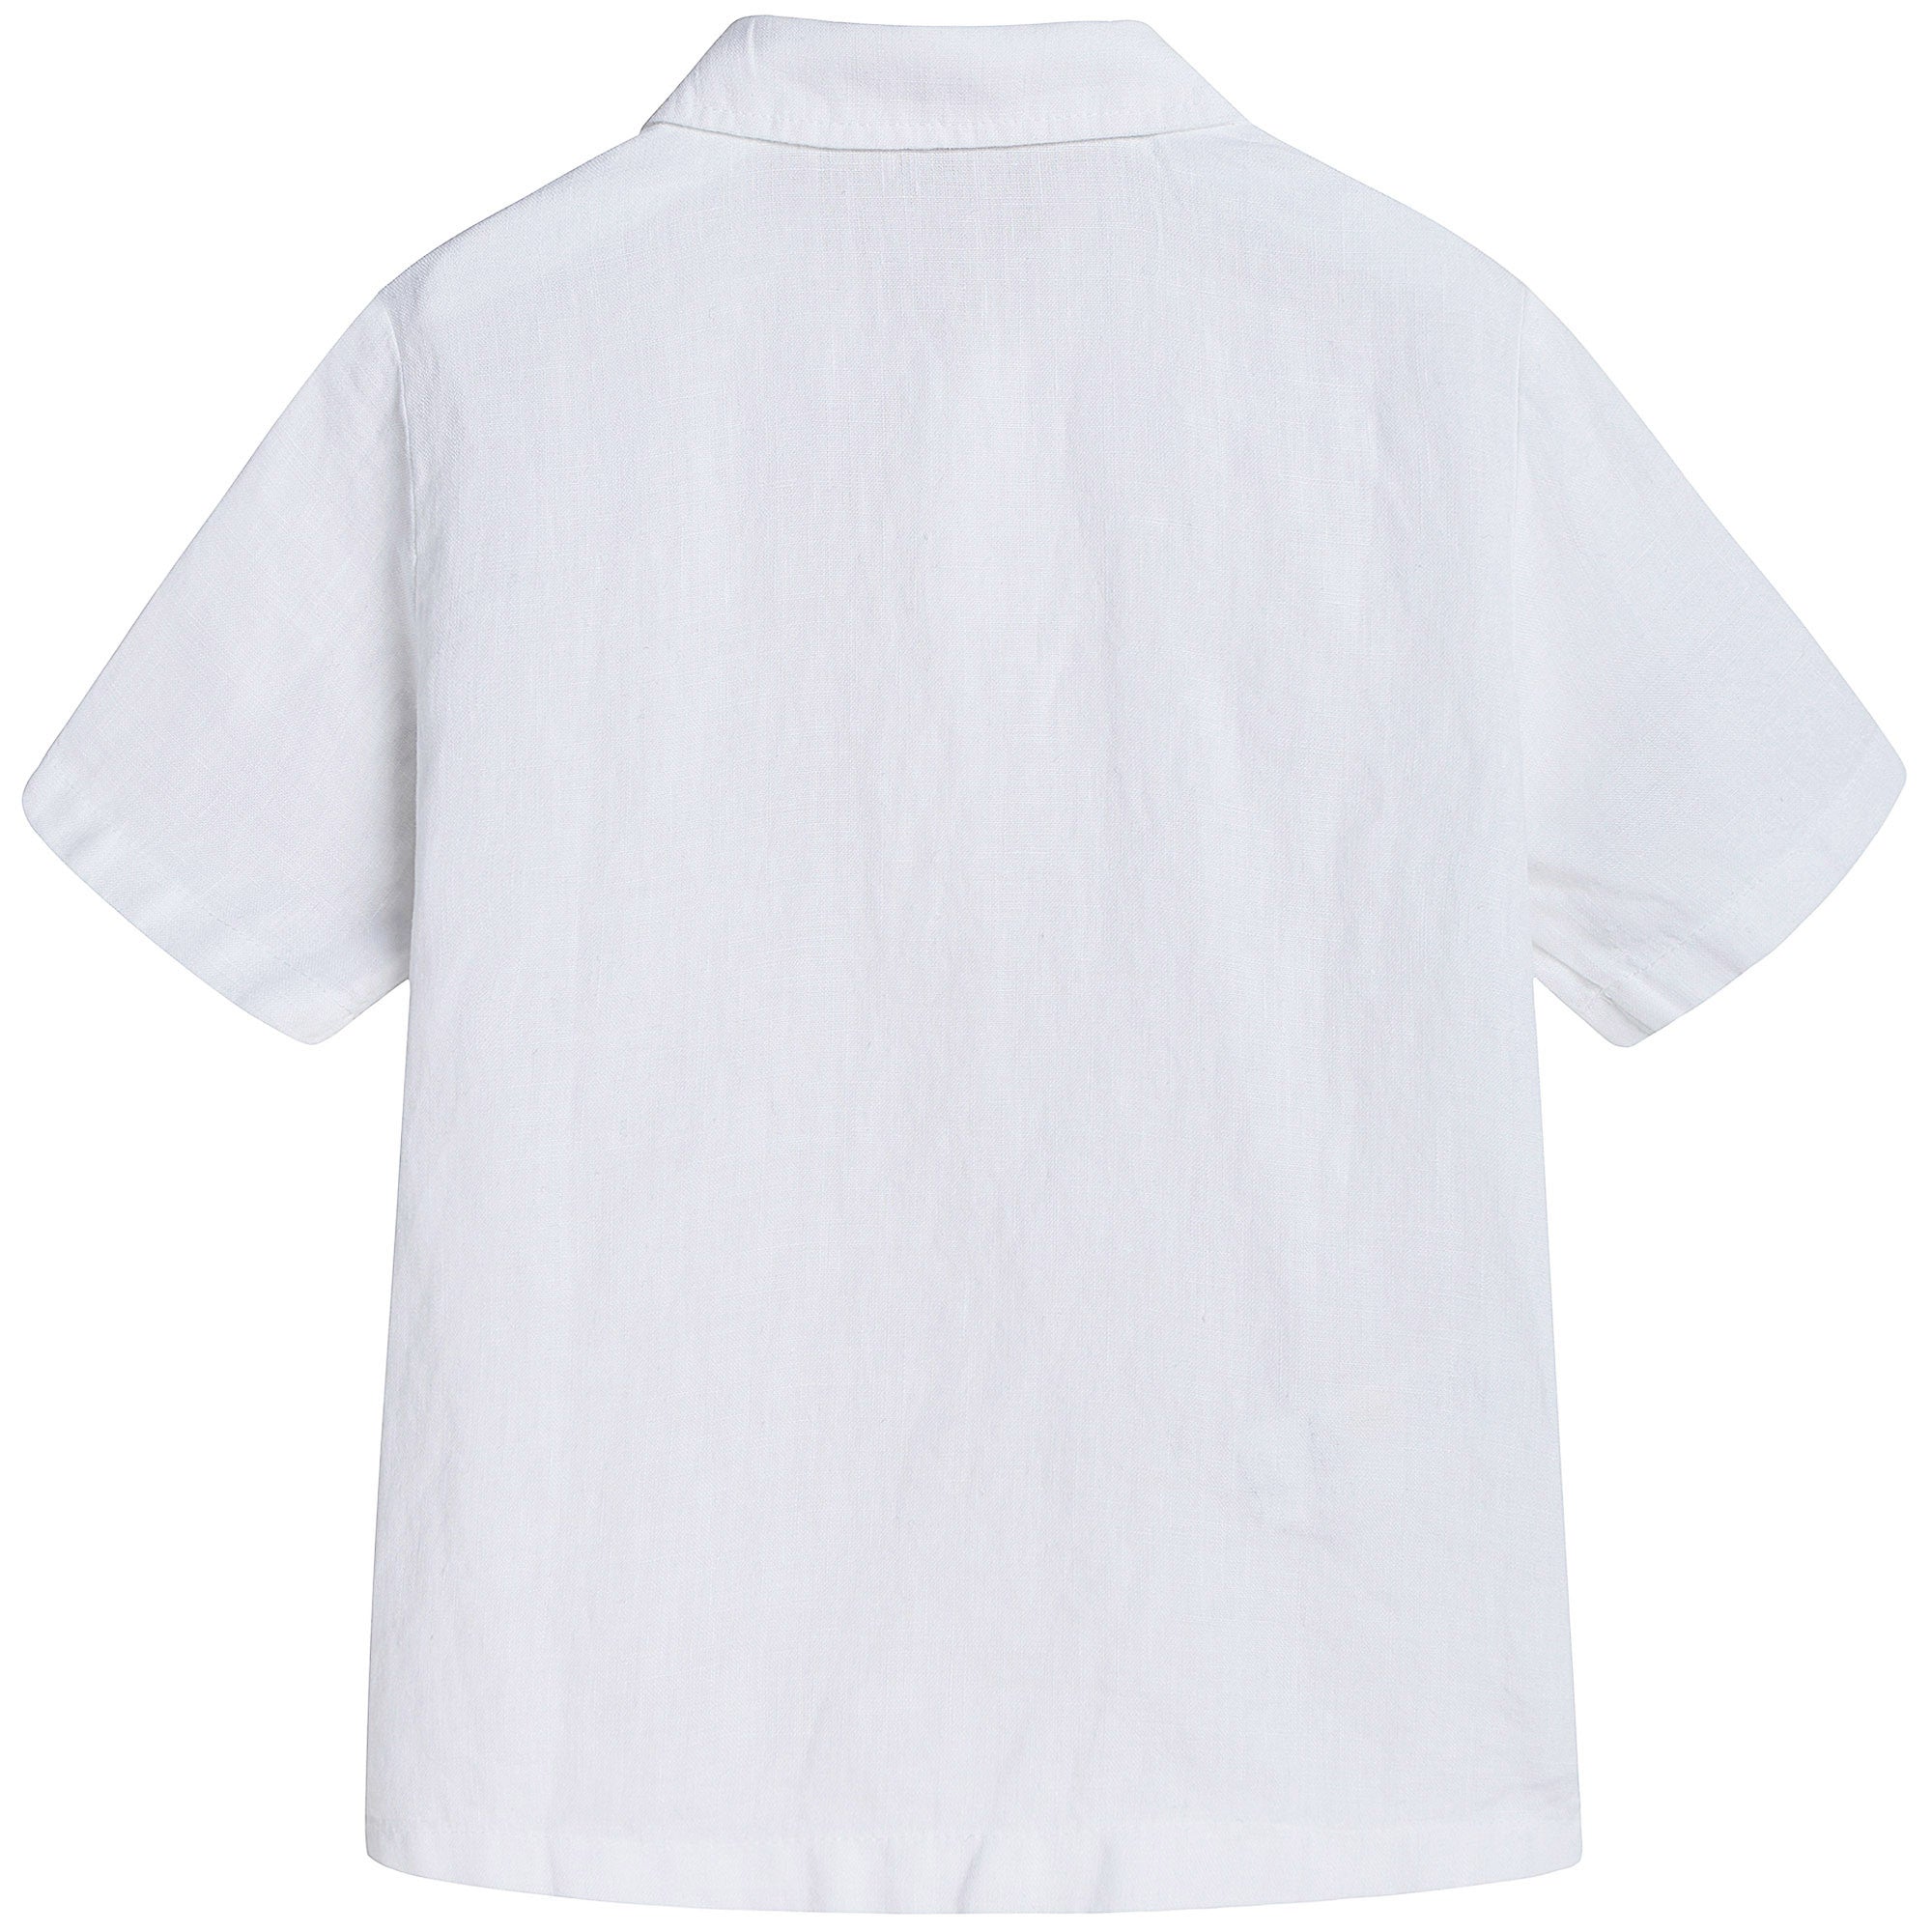 Boys White Polo Shirt - CÉMAROSE | Children's Fashion Store - 2